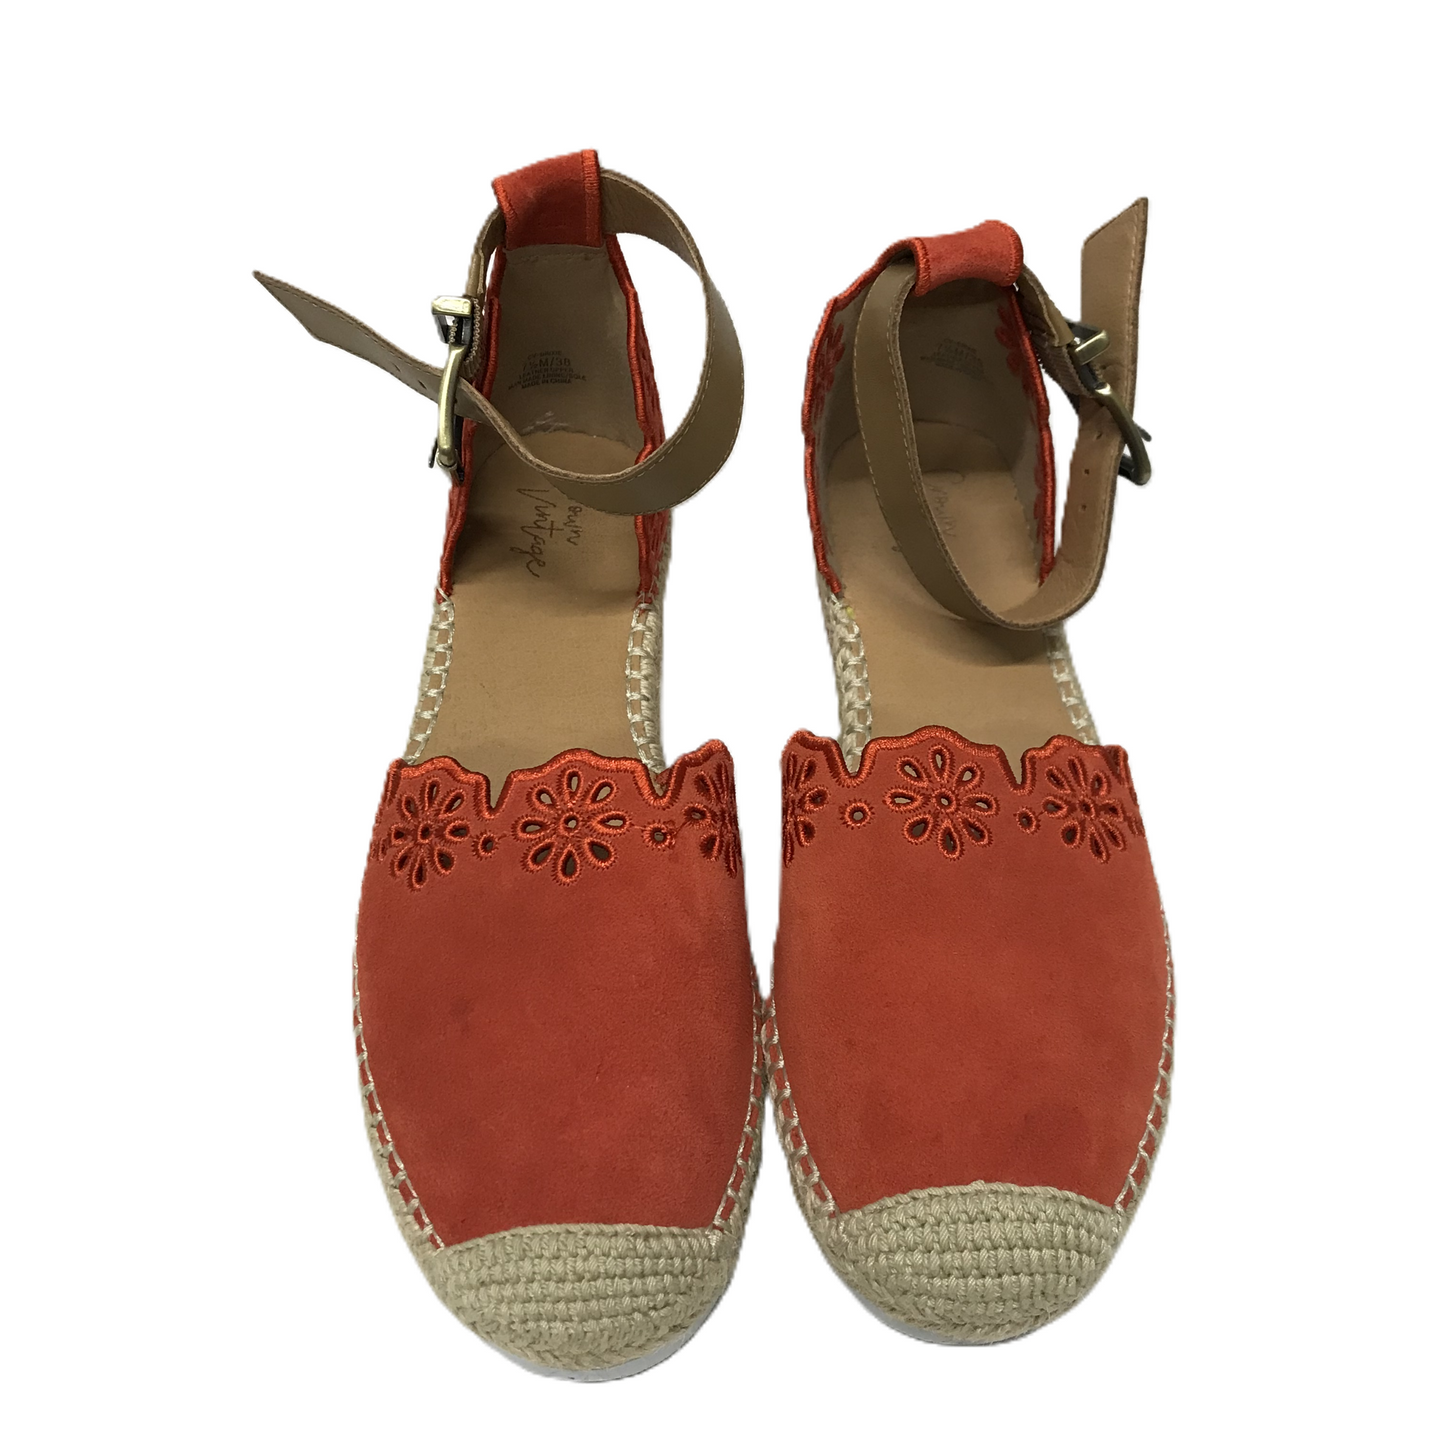 Orange Shoes Flats By Crown Vintage, Size: 7.5